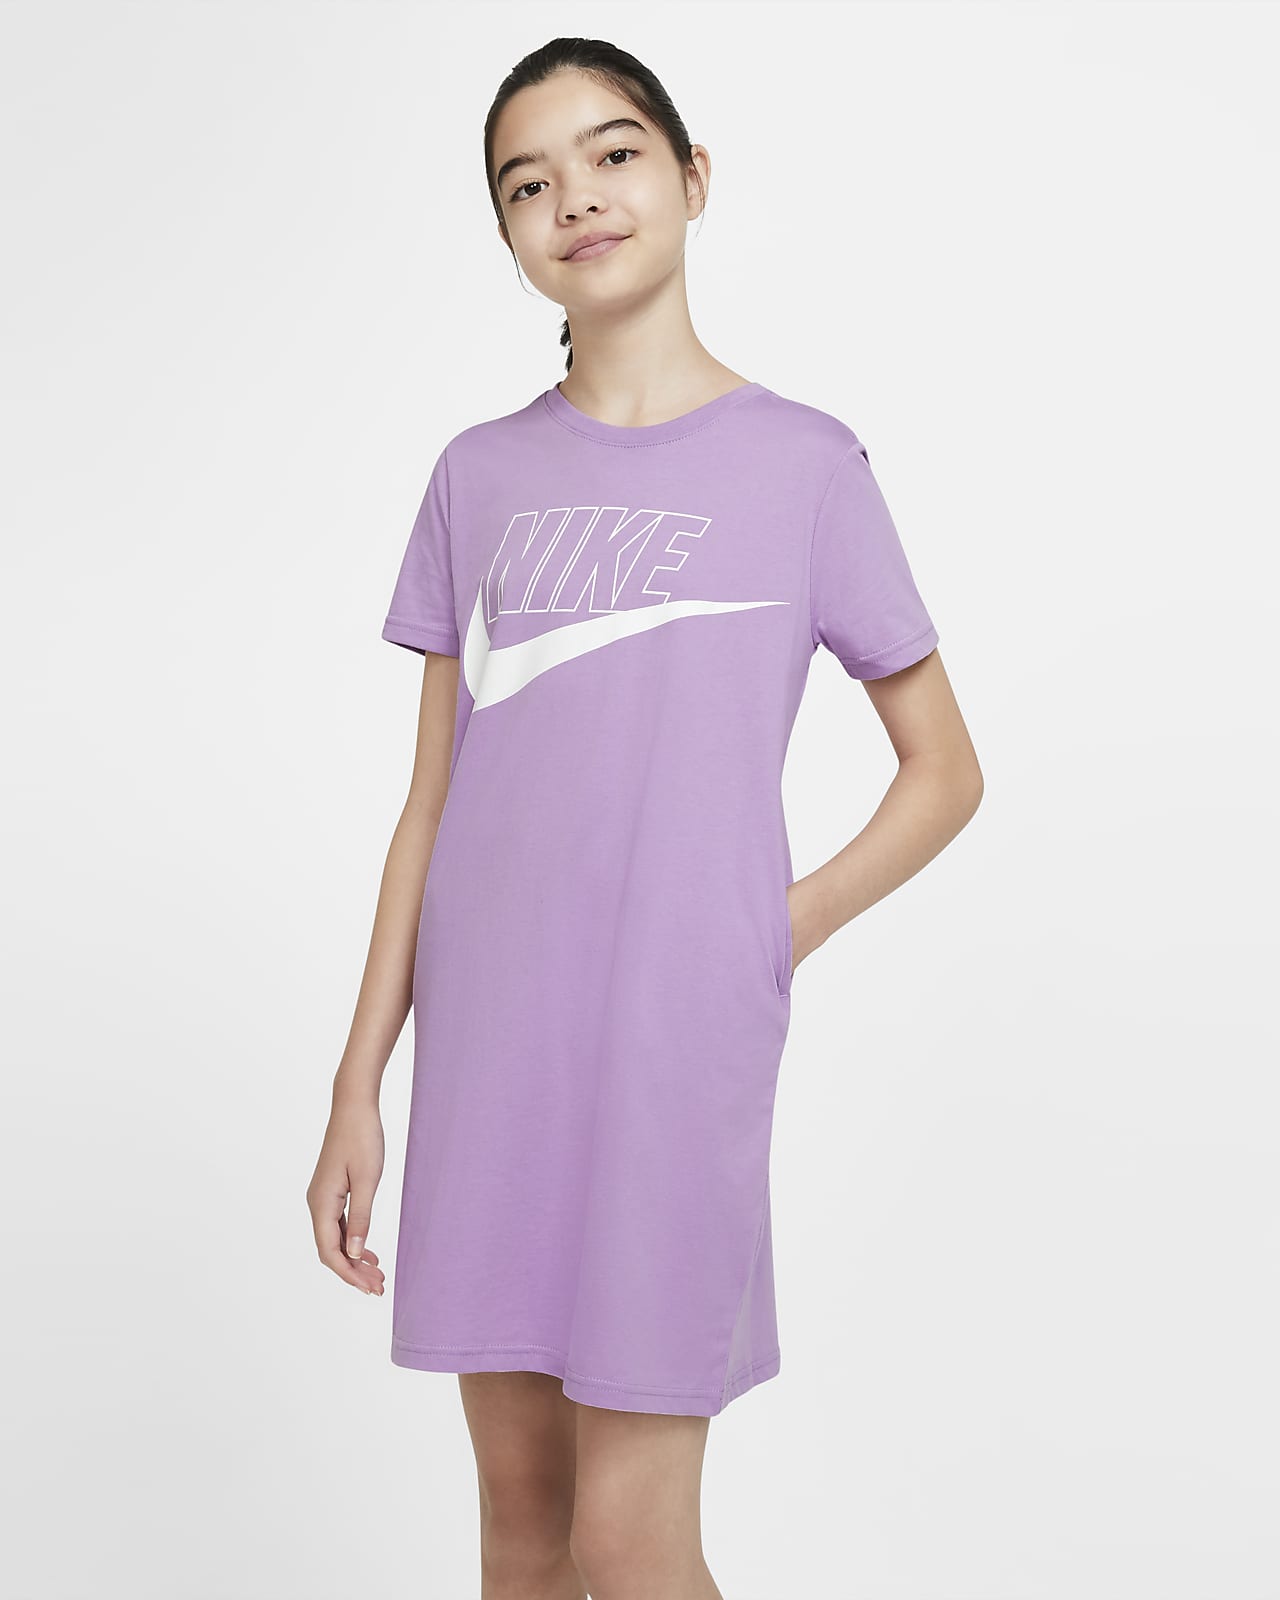 girls purple nike shirt